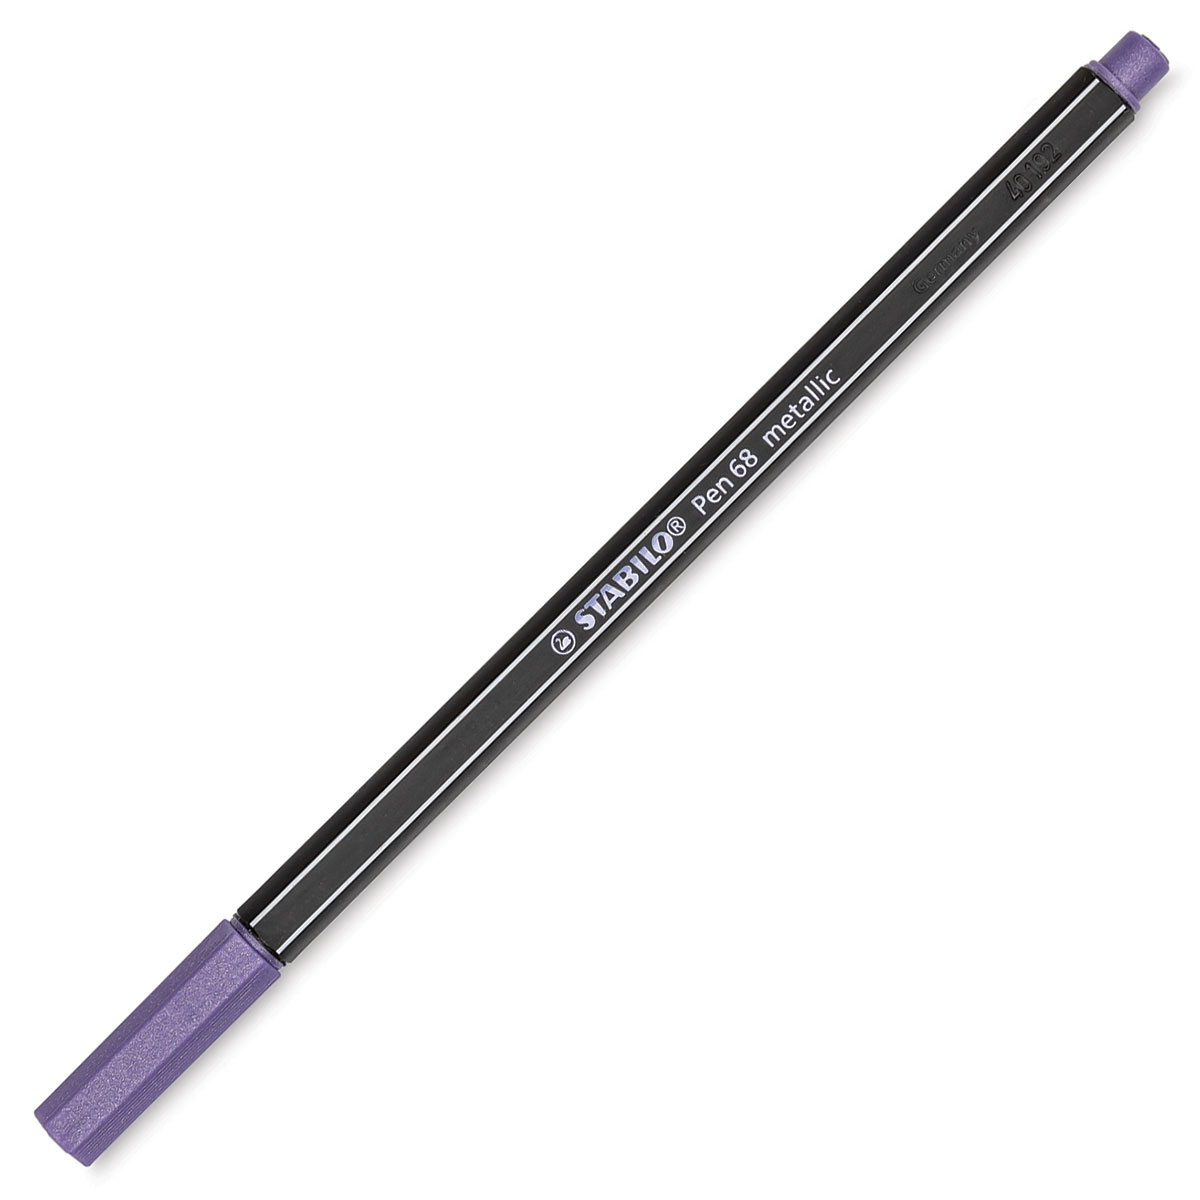 Stabilo Pen 68 Metallic Pens and Sets